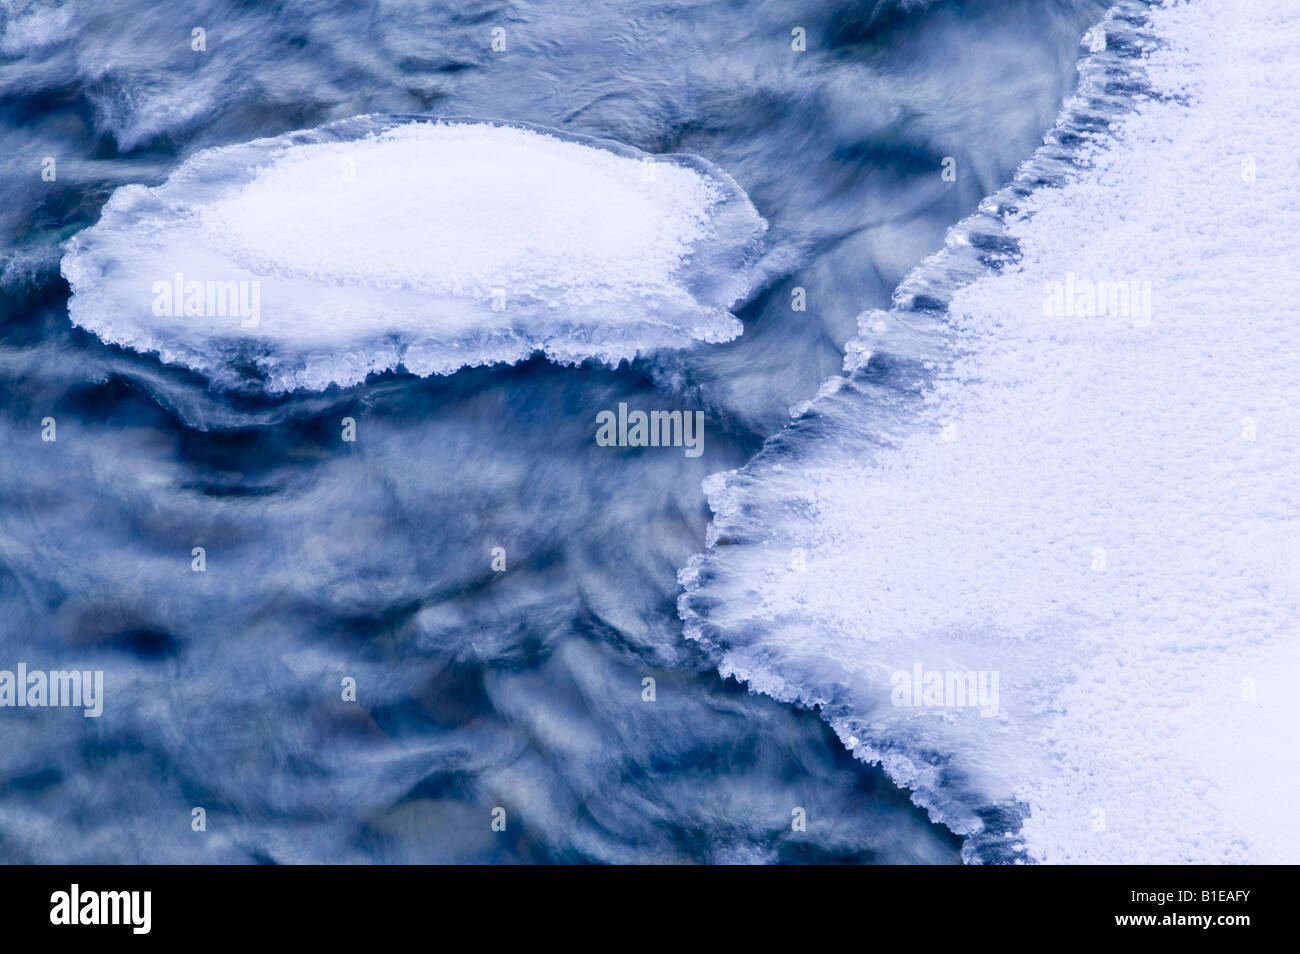 Close up of stream and shelf ice in winter near Fairbanks Alaska Stock Photo